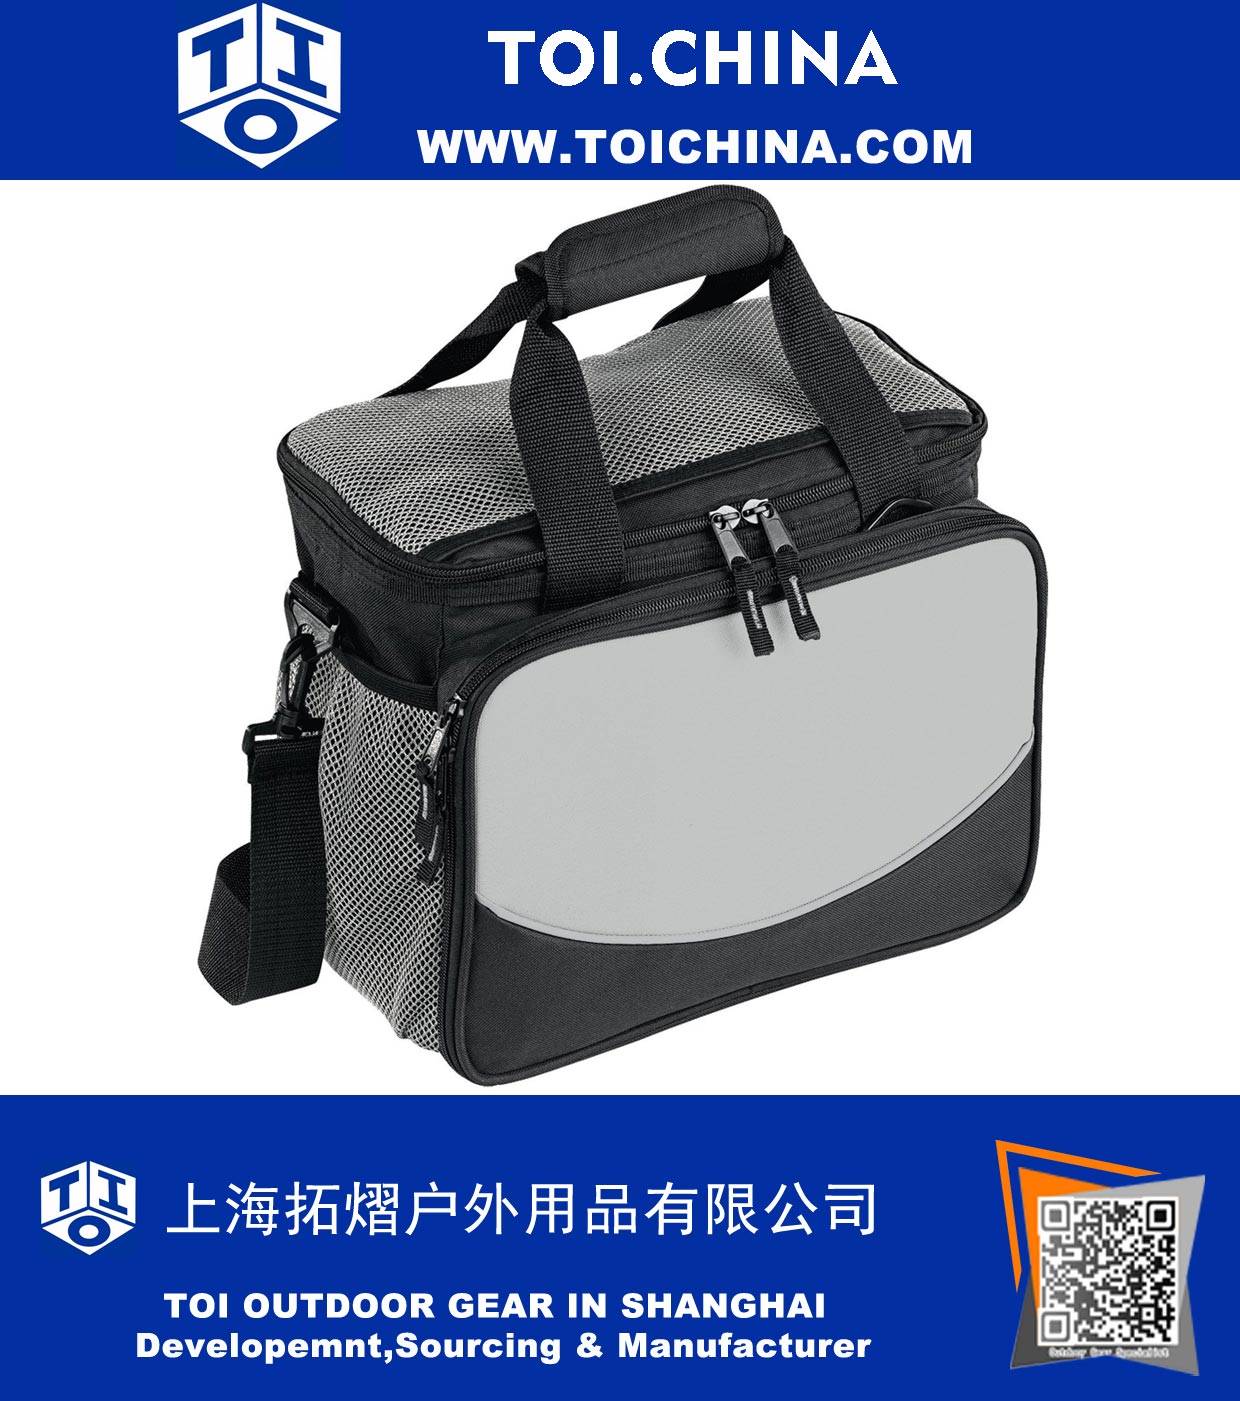 16 Can Insulated Lunch bag Cooler с Handy Fold Down Кубок Держатель, плечевой ремень и 3 кармана сетки